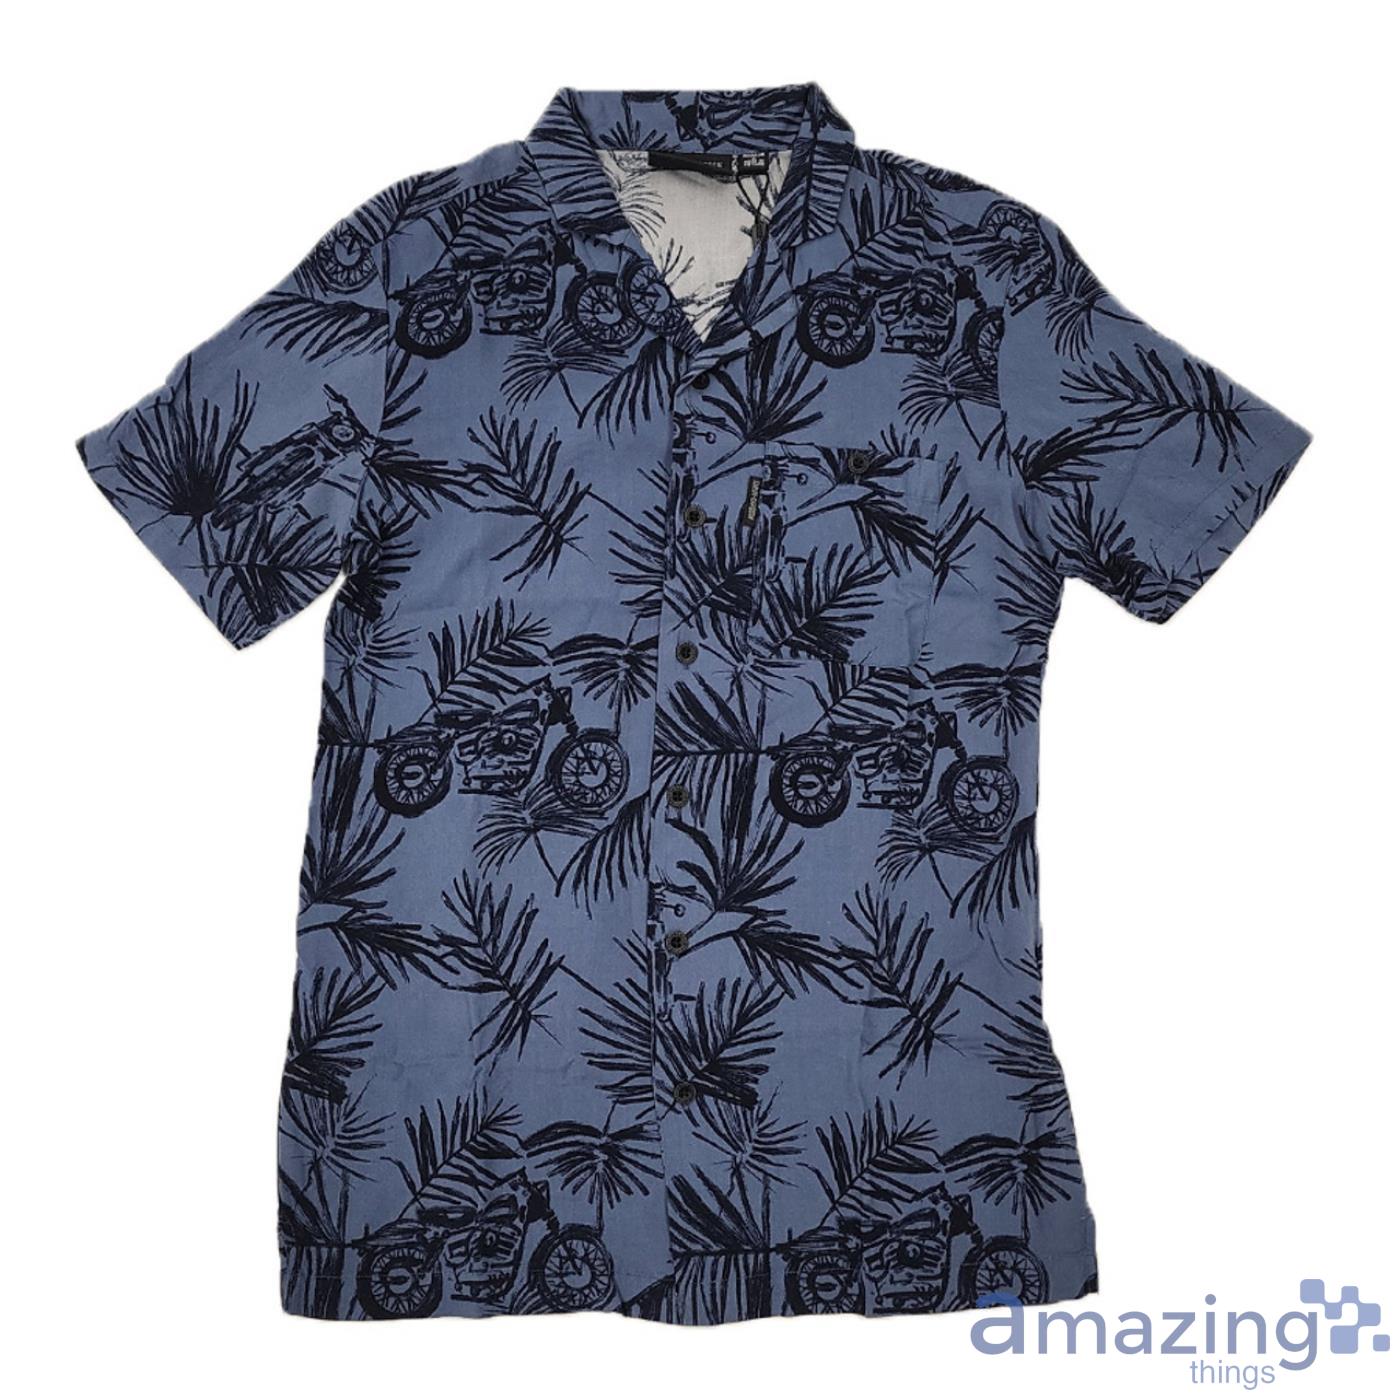 Harley-Davidson Motorcycles And Palm Leaves Short Sleeve Hawaiian Shirt Blue Product Photo 1